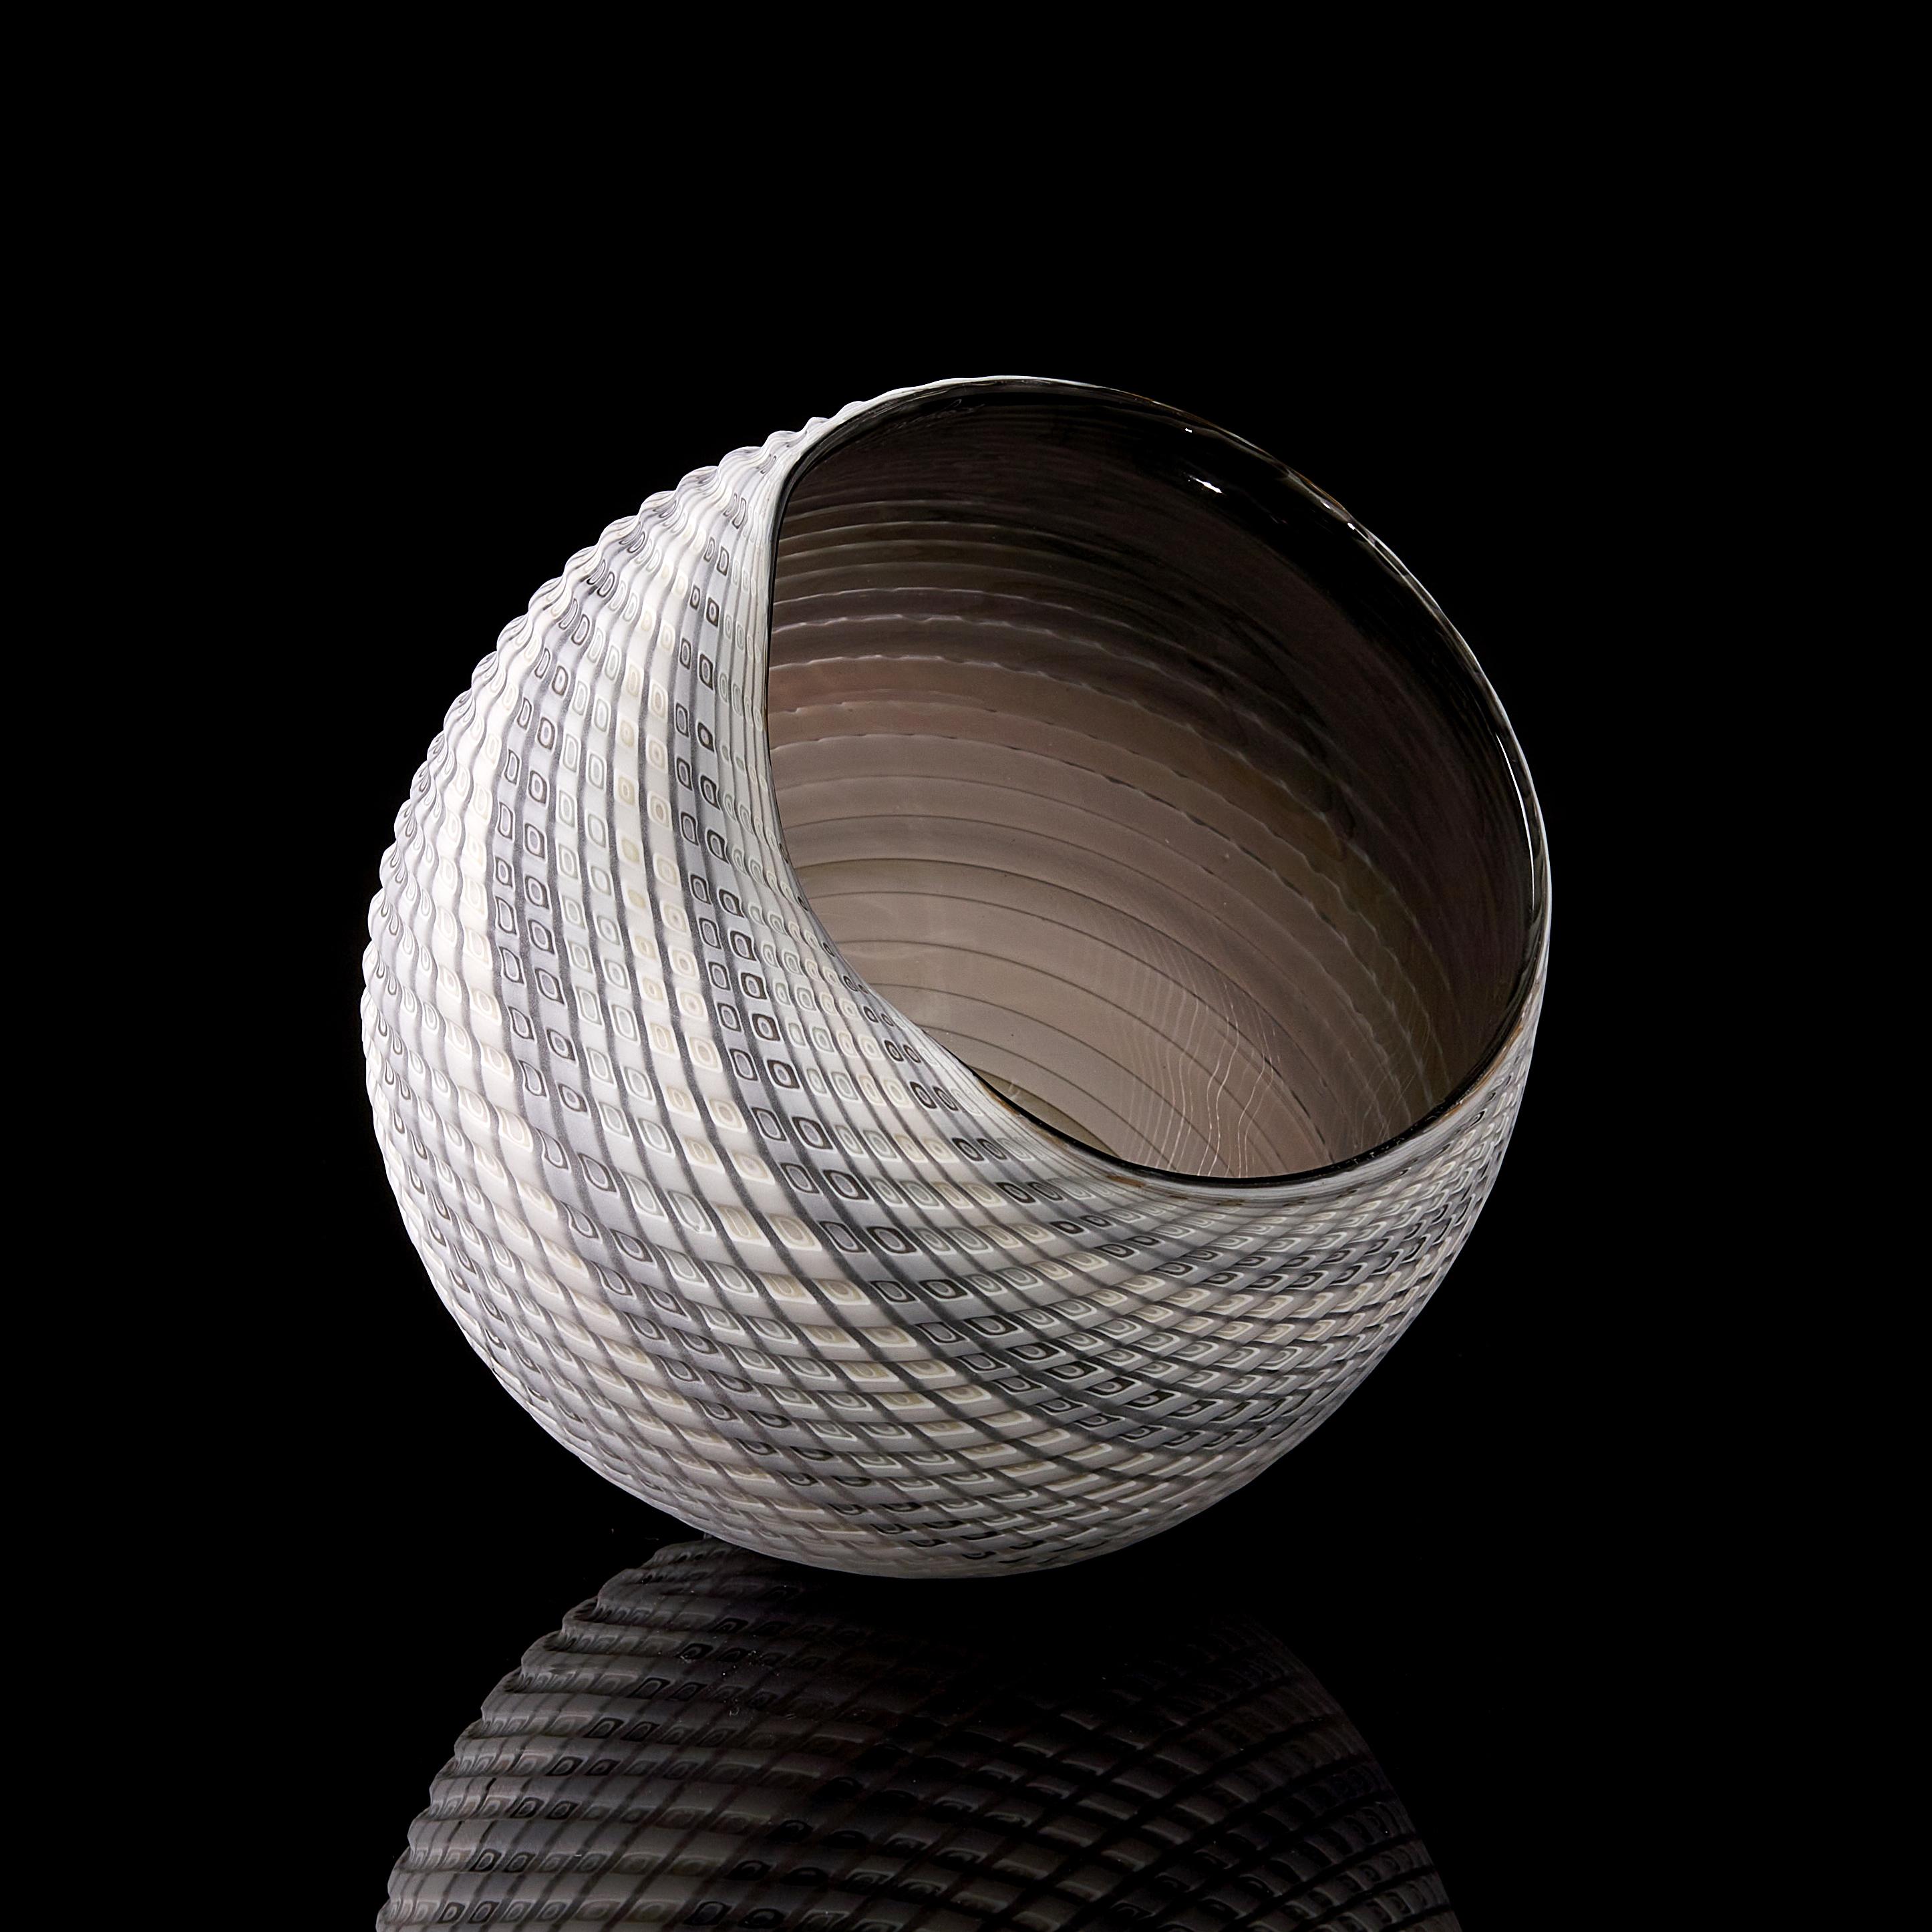 Hand-Crafted Woven Mandala Trio, an Organic Textured Art Glass Still Life by Layne Rowe